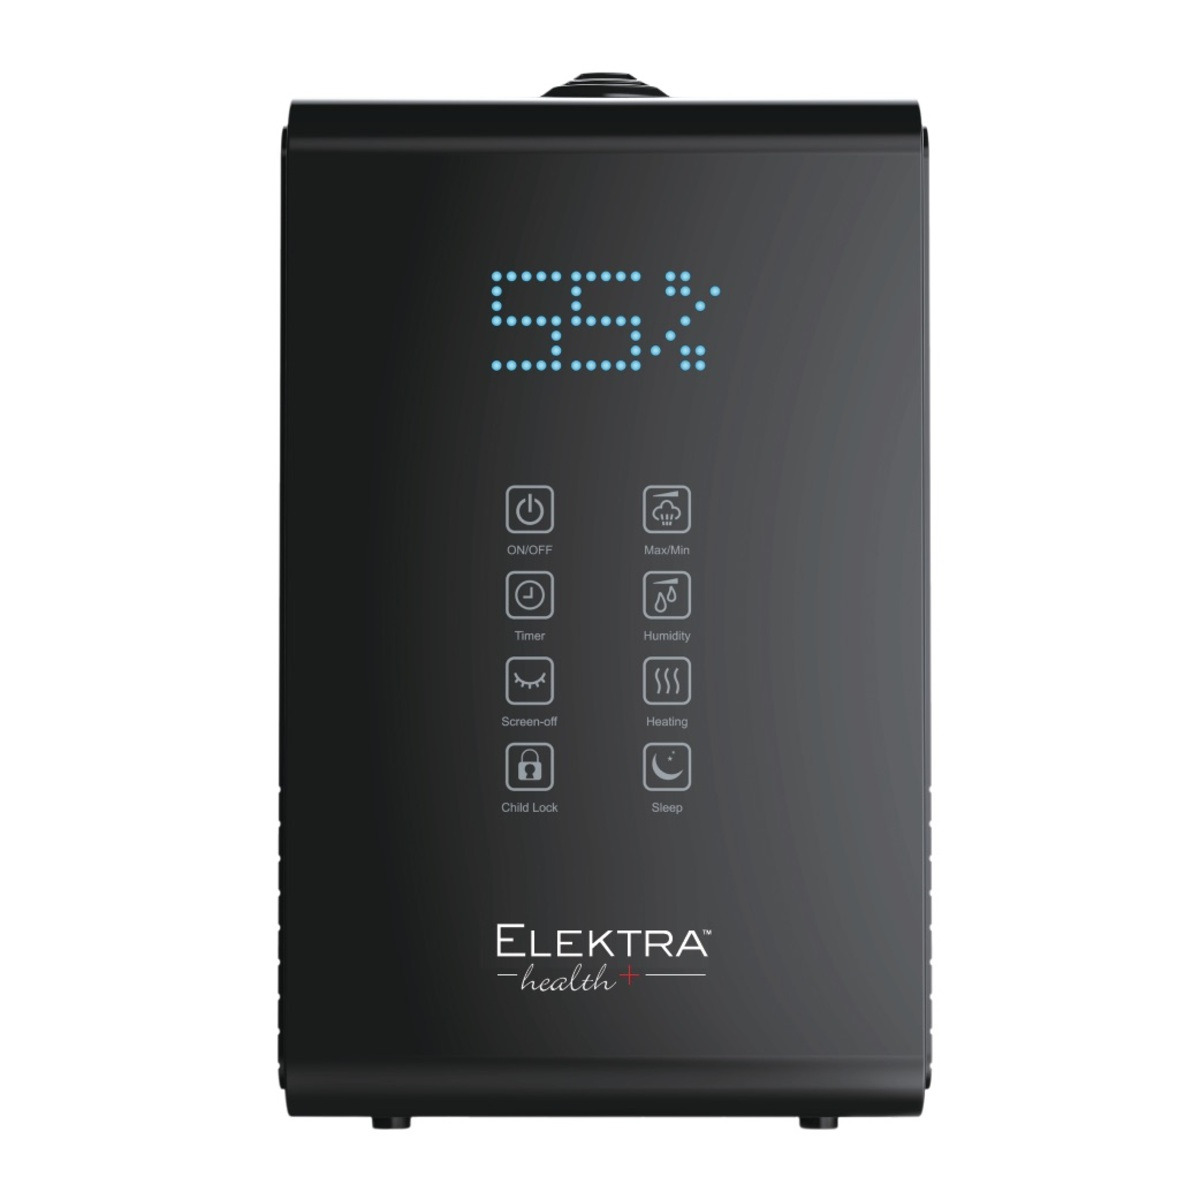 Elektra Platinum Cool/Warm Steam Humidifier